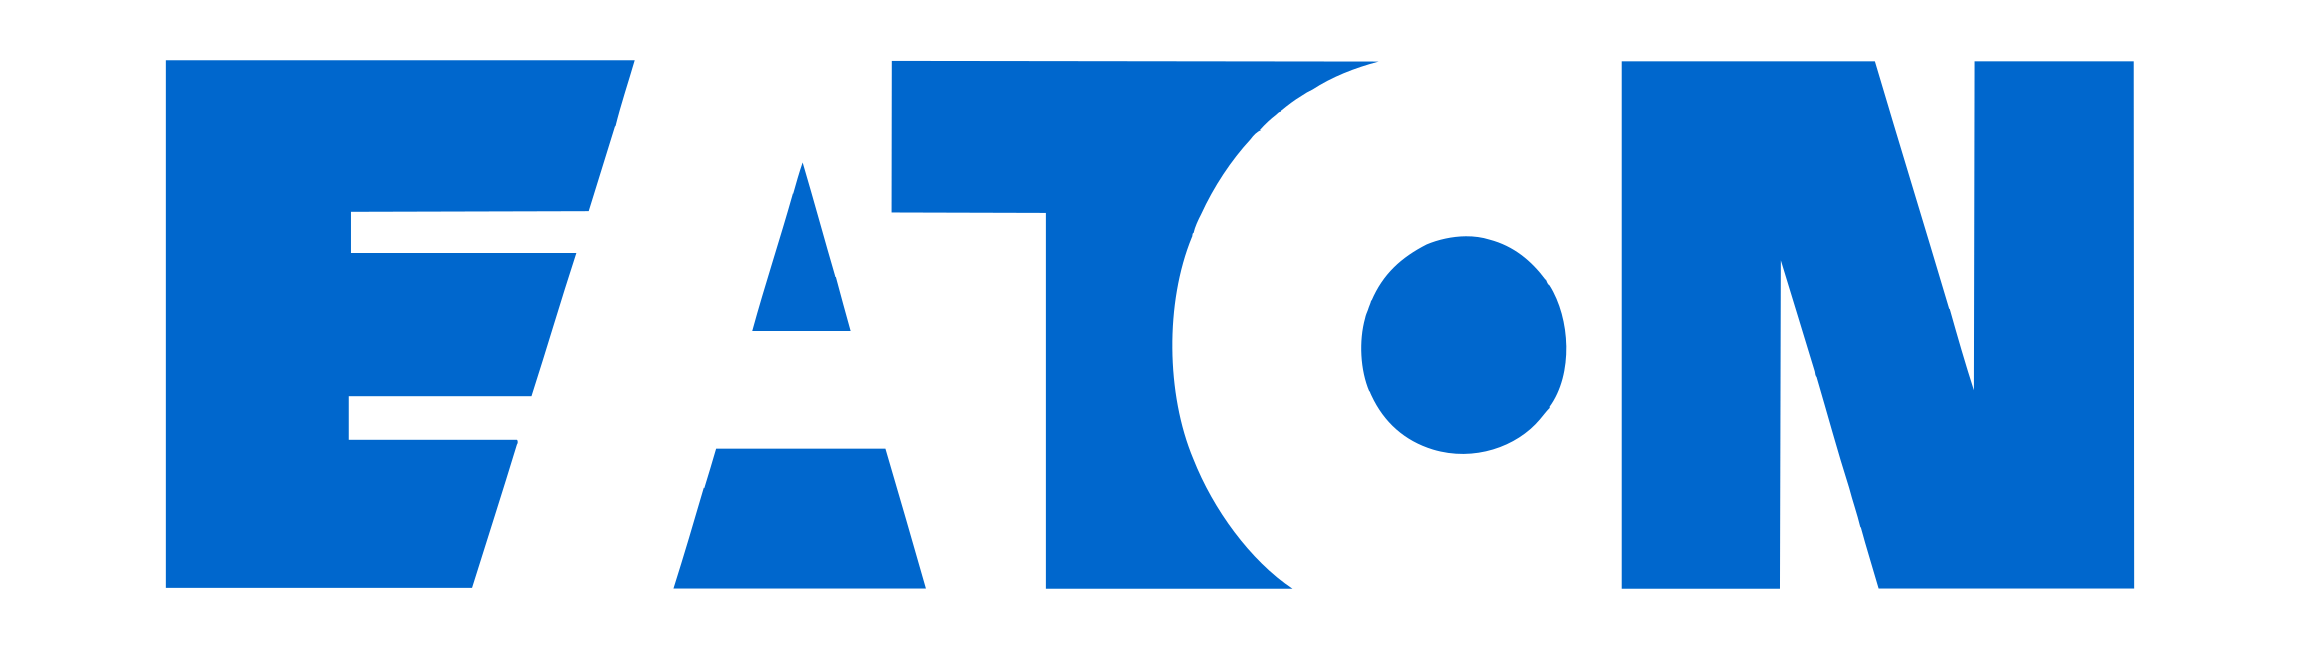 Eaton-Logo.png